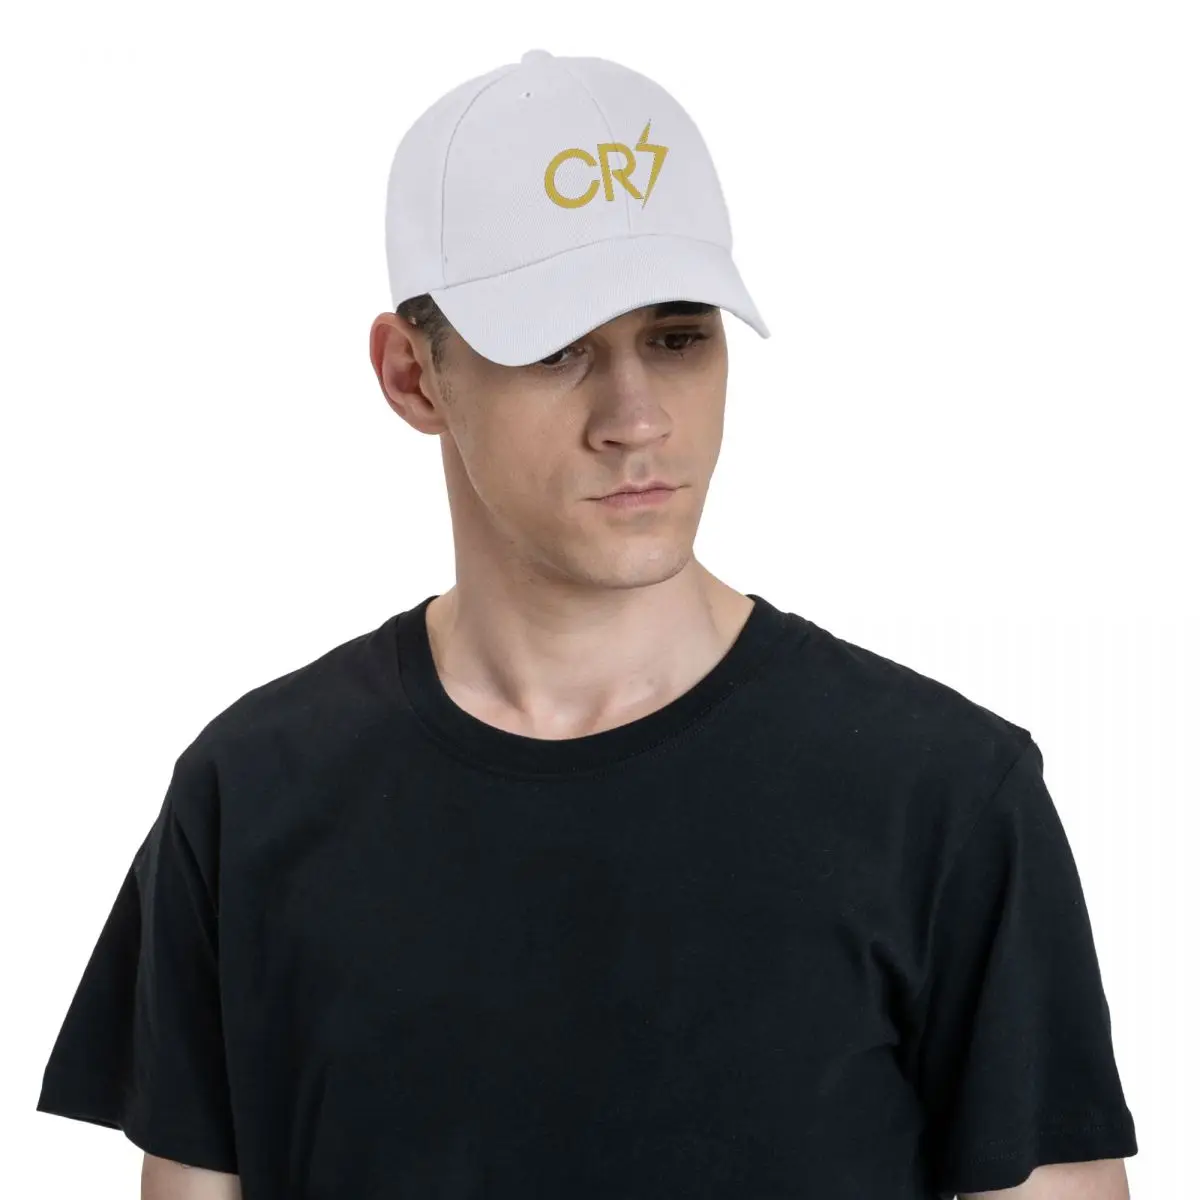 CR7 Cristiano Ronaldo Sepci de Baseball Snapback Moda Pălării de Baseball Respirabil Casual în aer liber Unisex Personalizate Policromie . ' - ' . 3